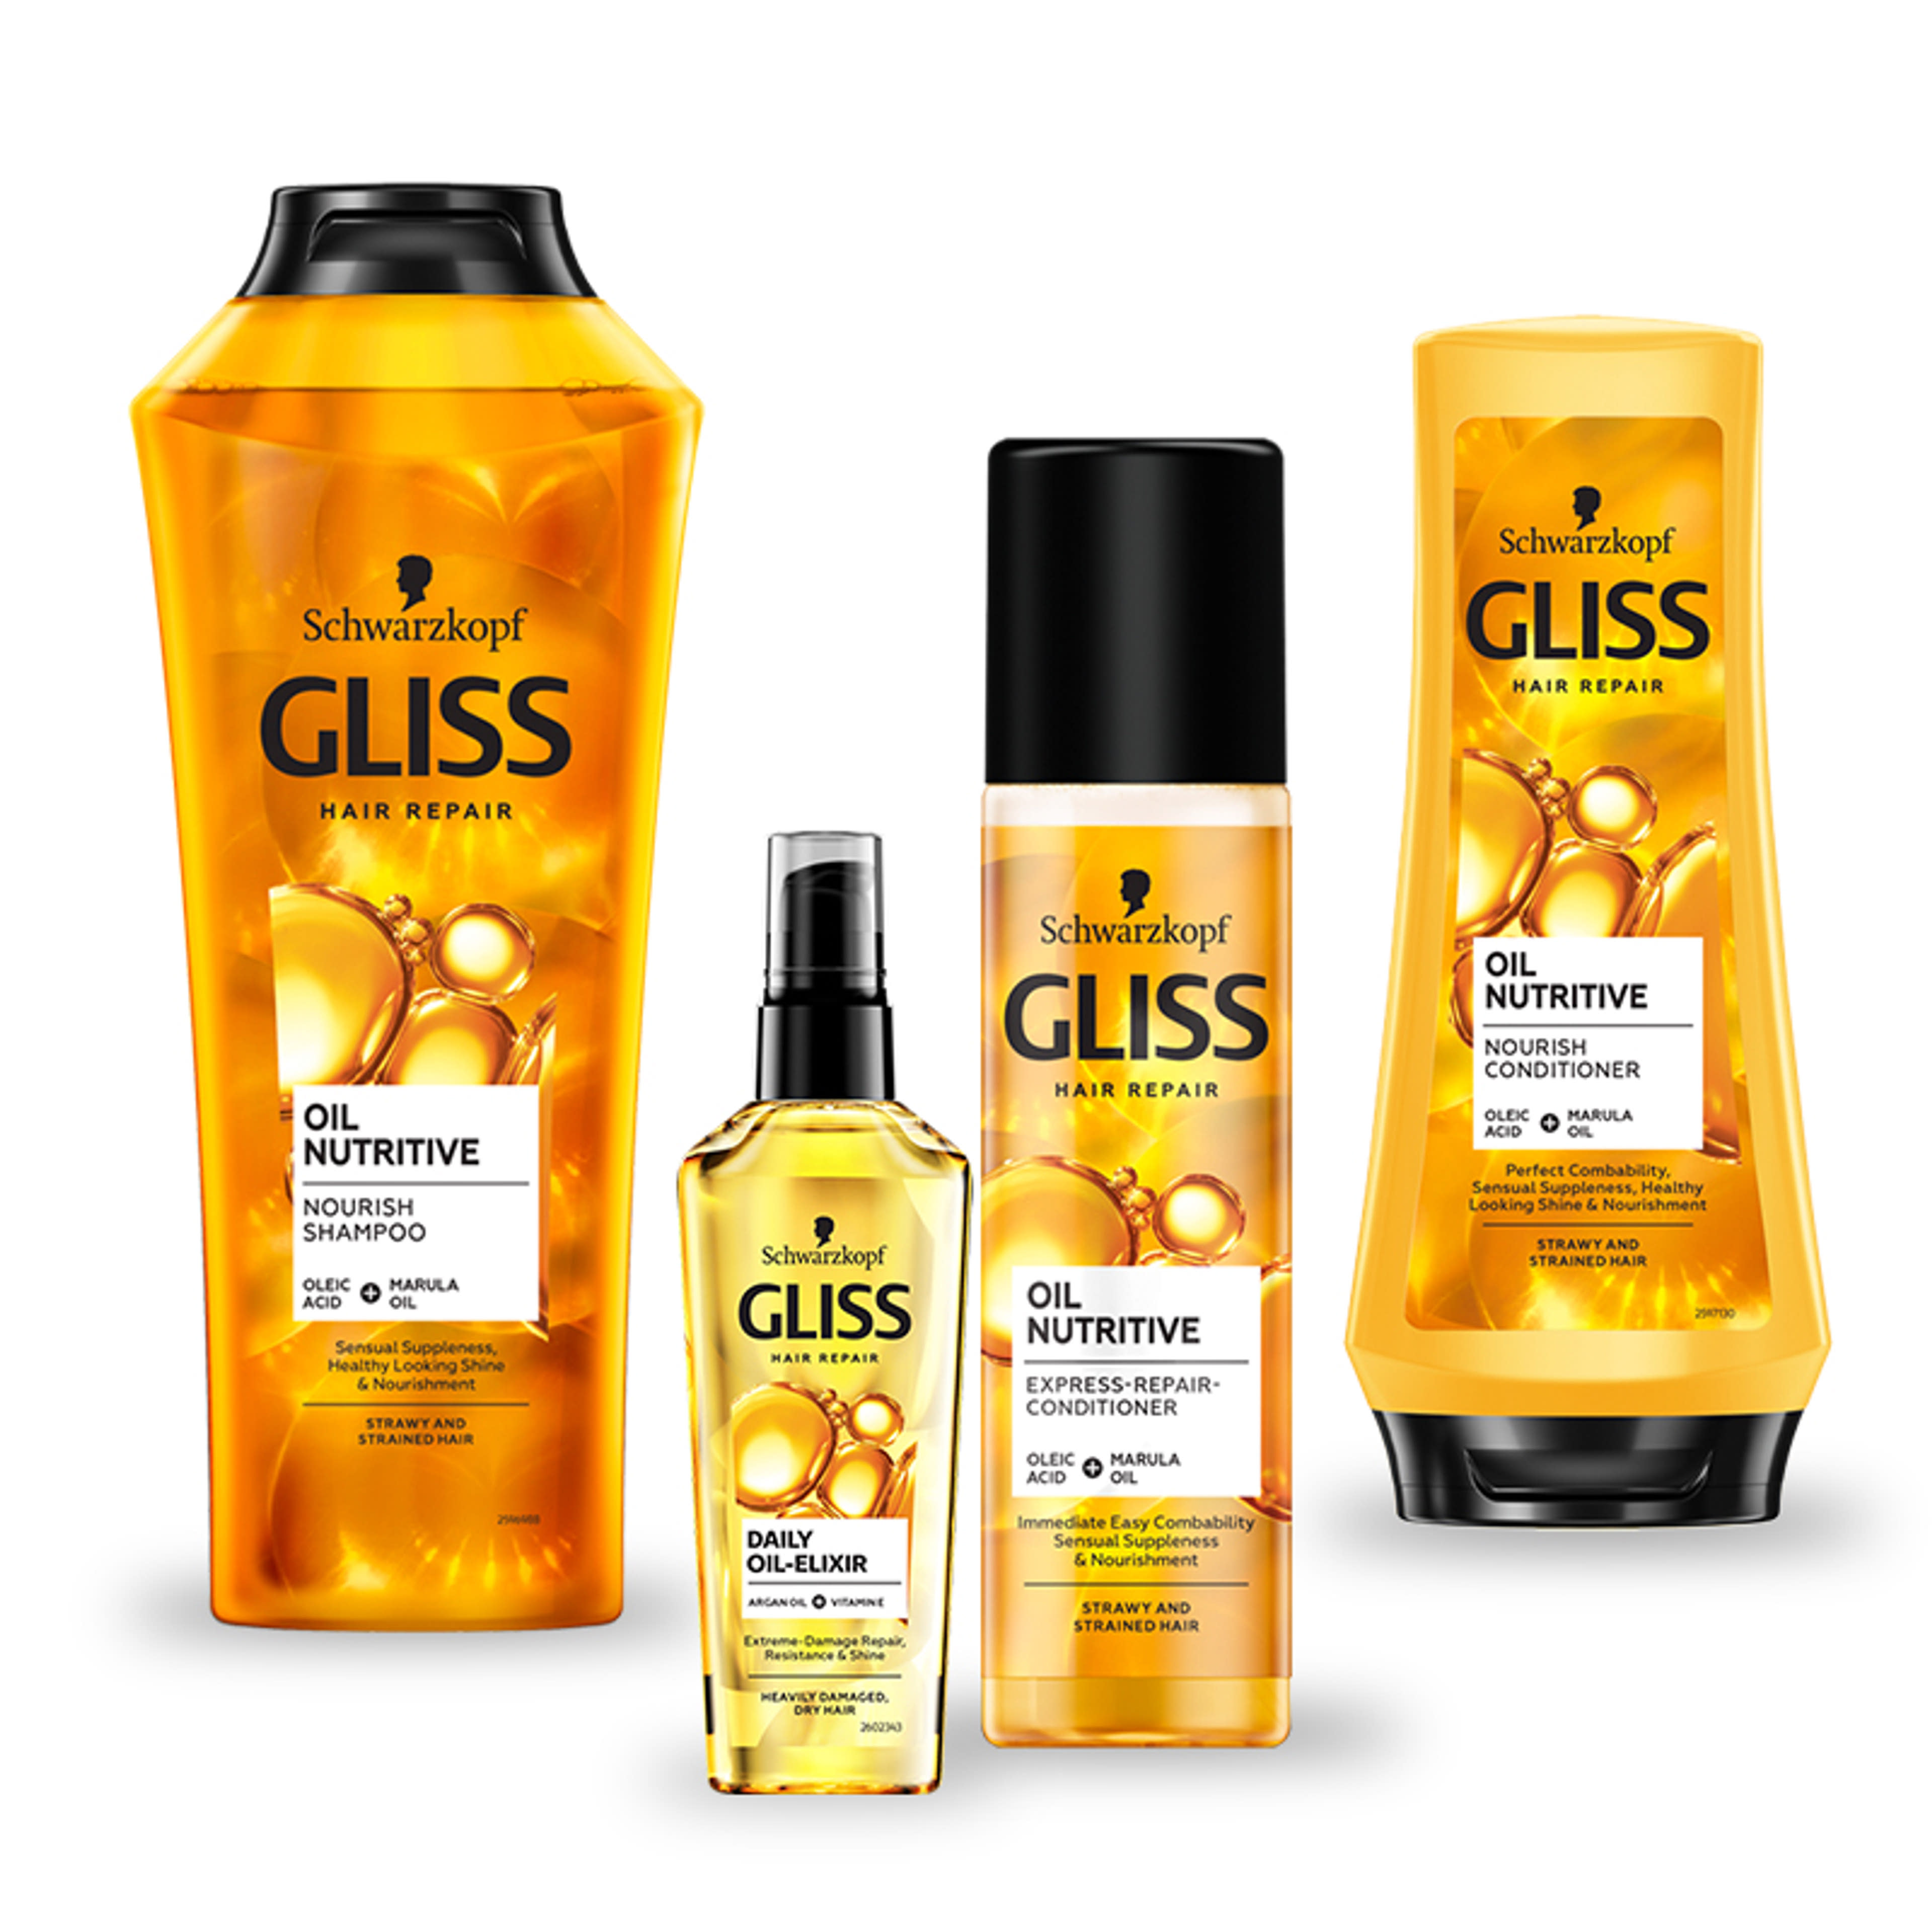 Gliss Oil Nutritive hajápolási csomag